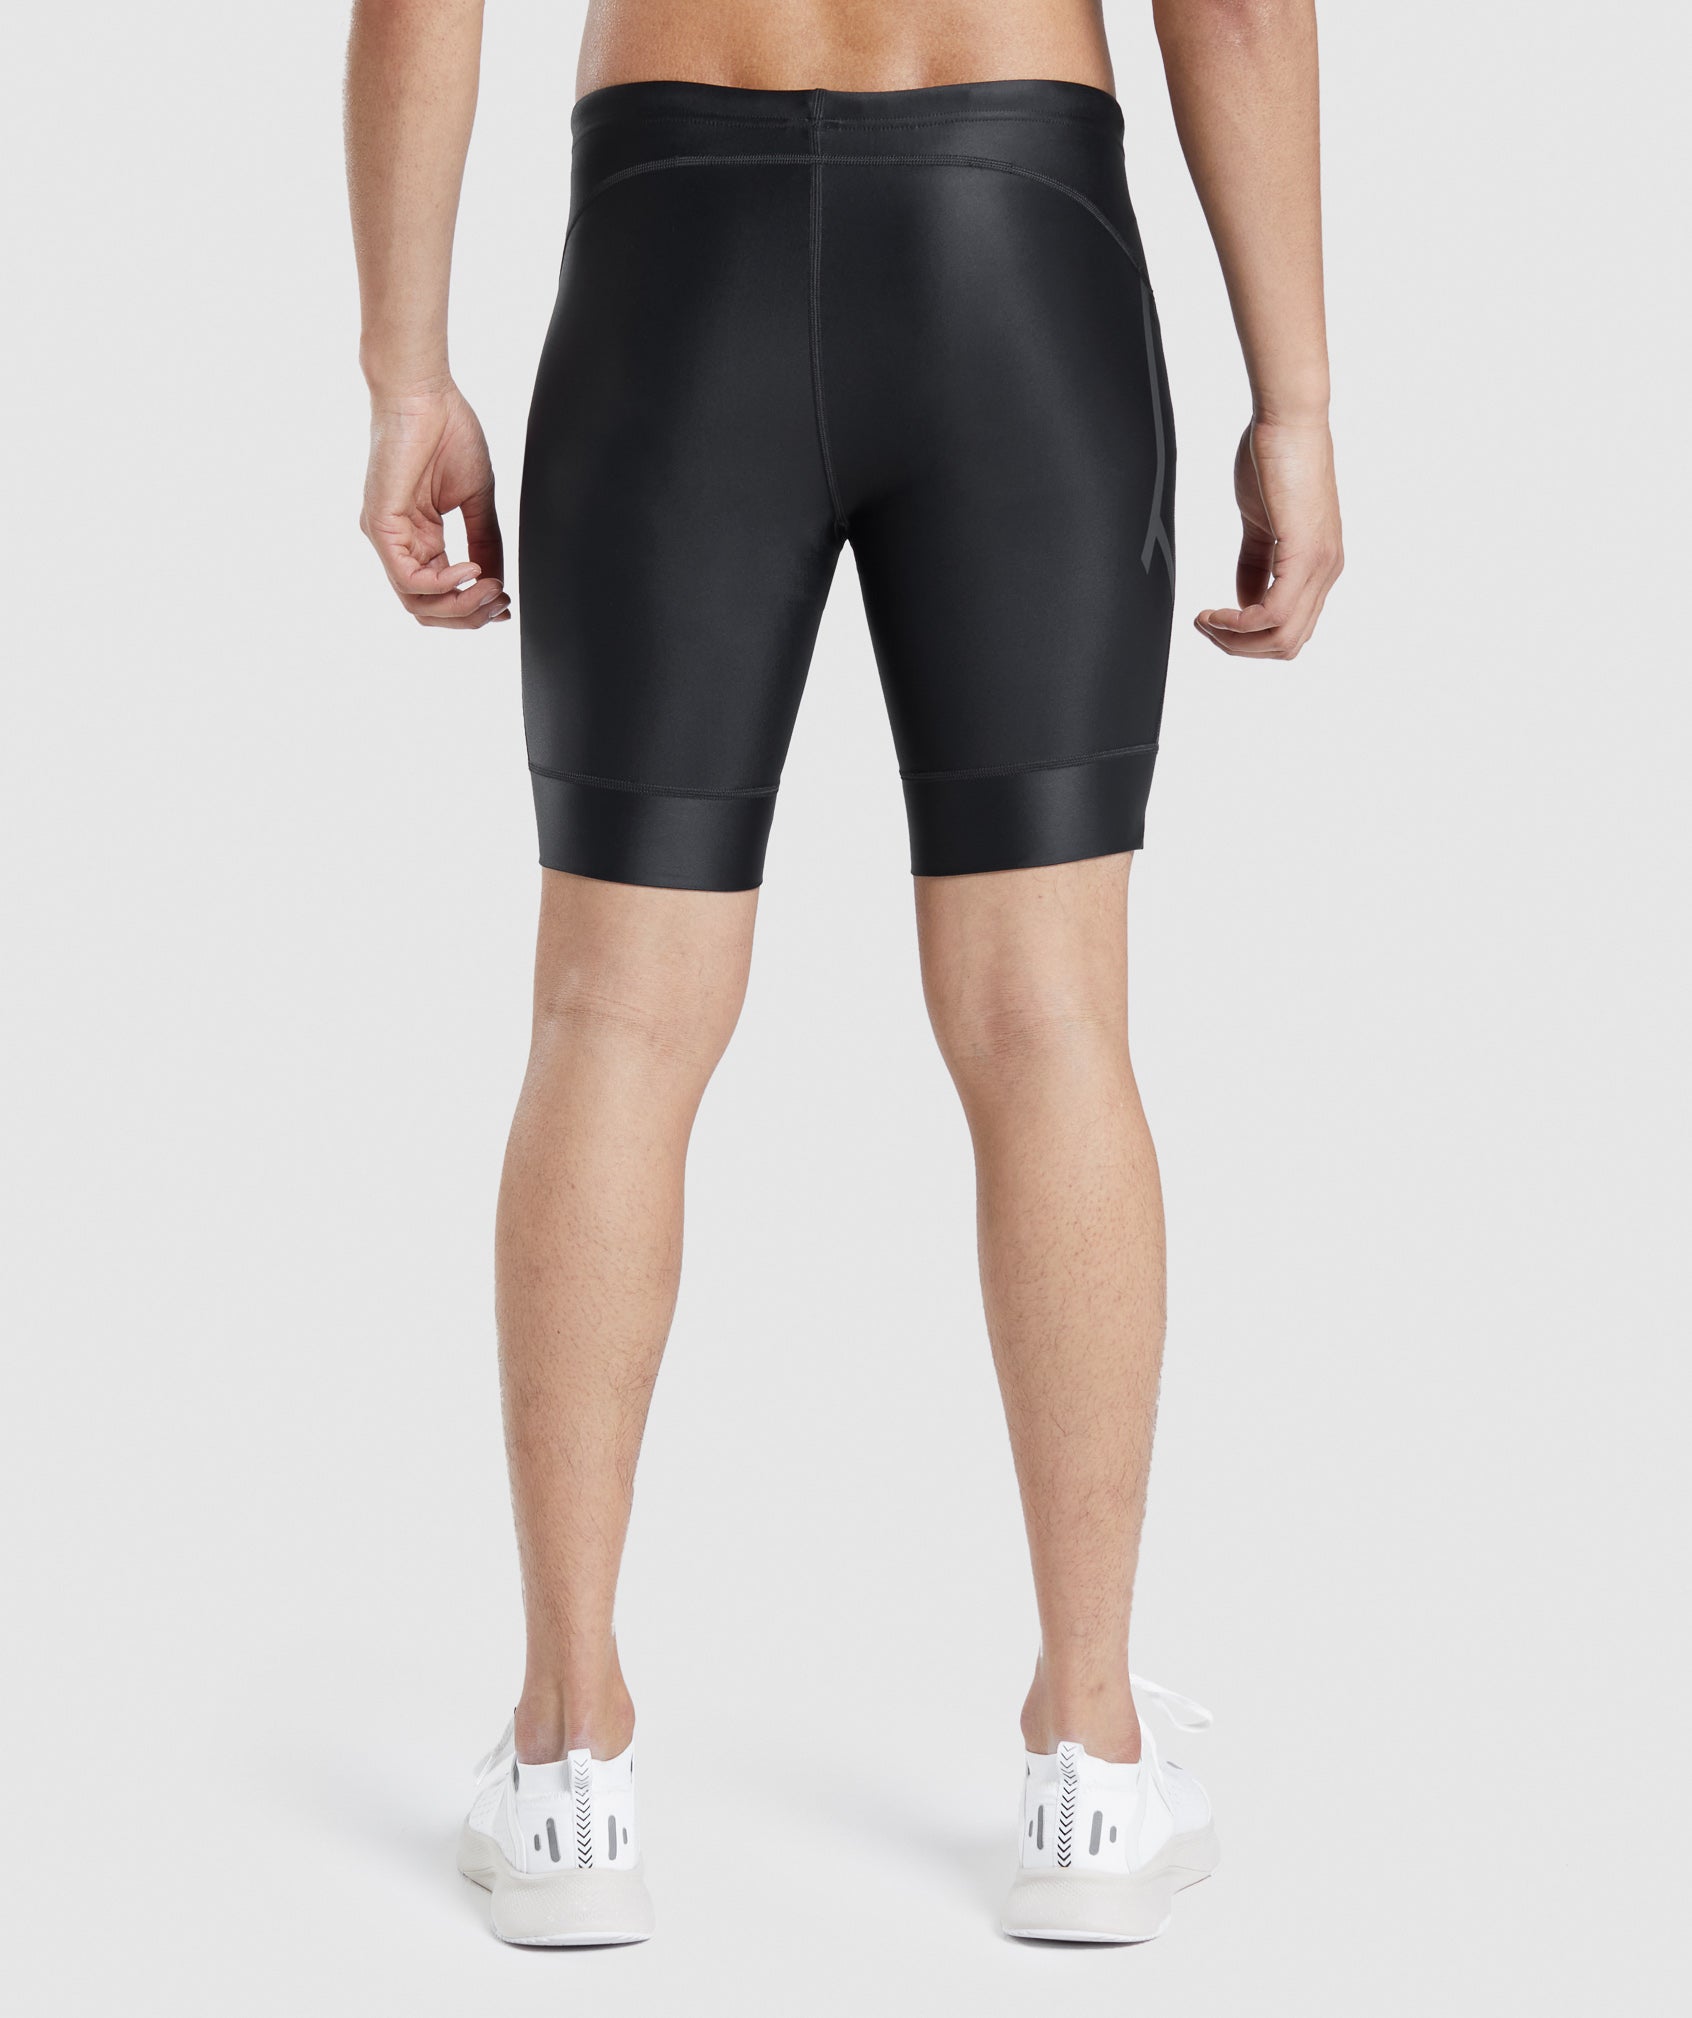 Gymshark Apex Multi Shorts - Black